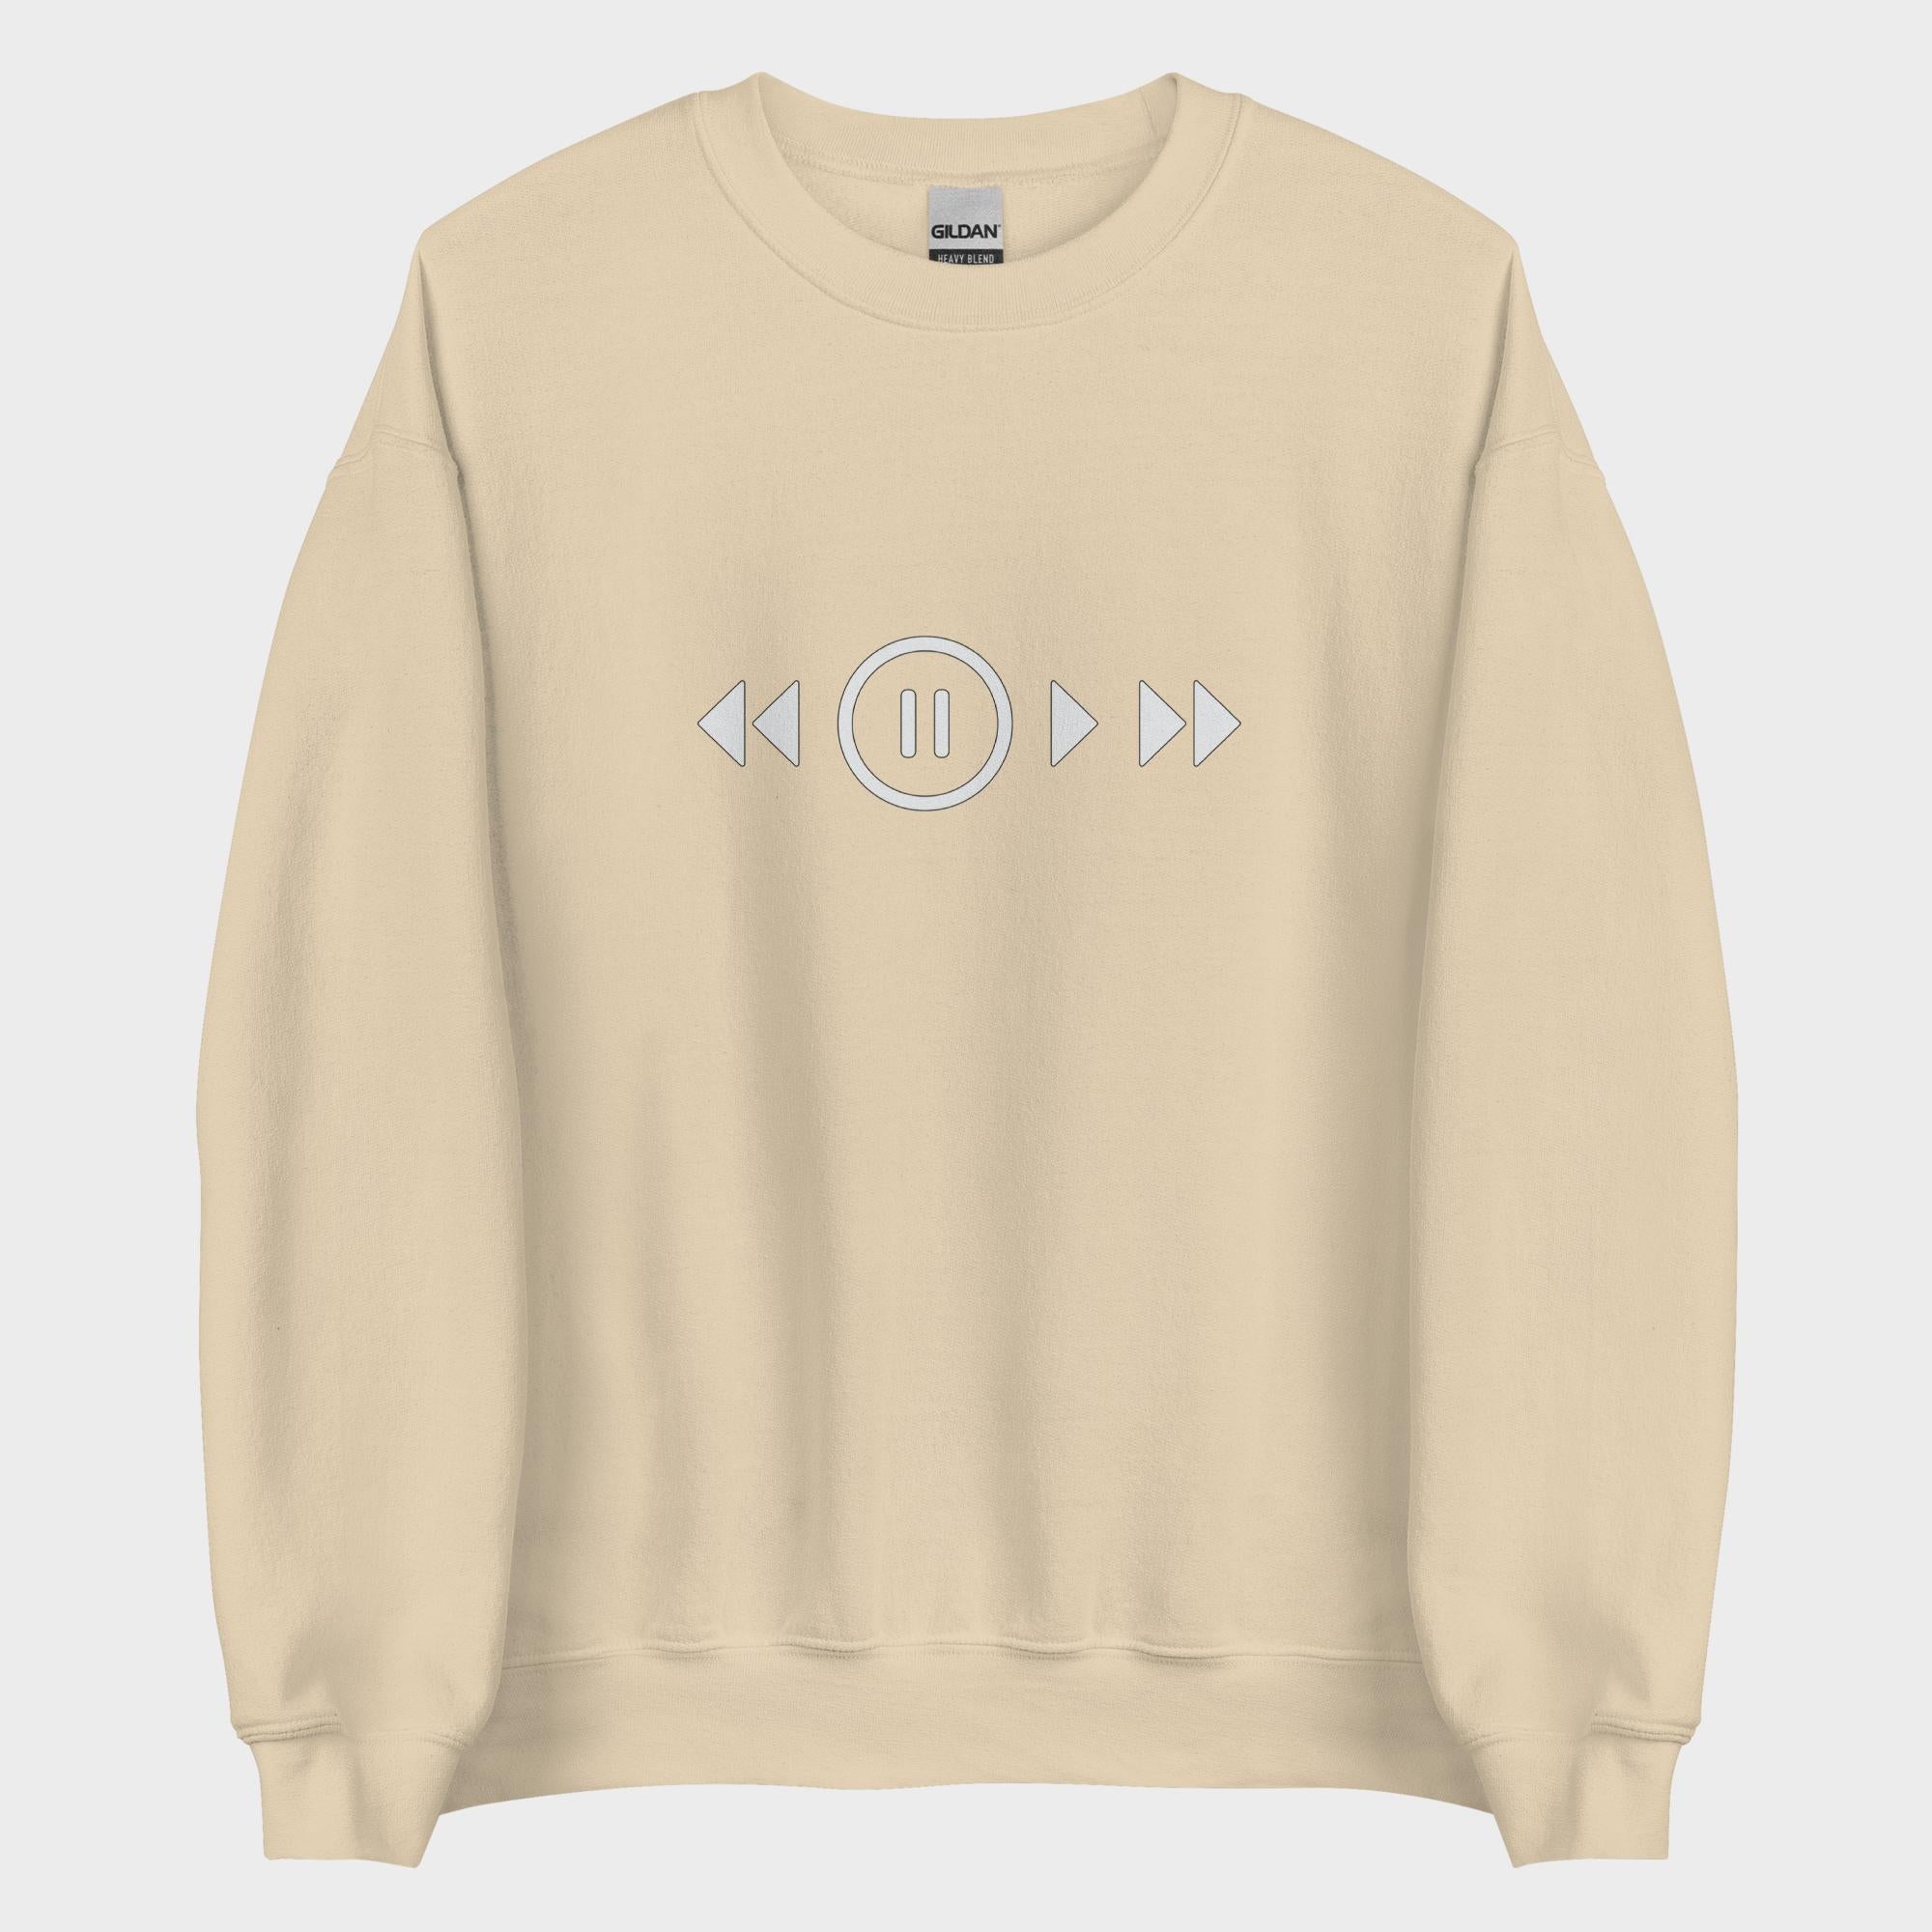 Don't Stop The Music - Sweatshirt